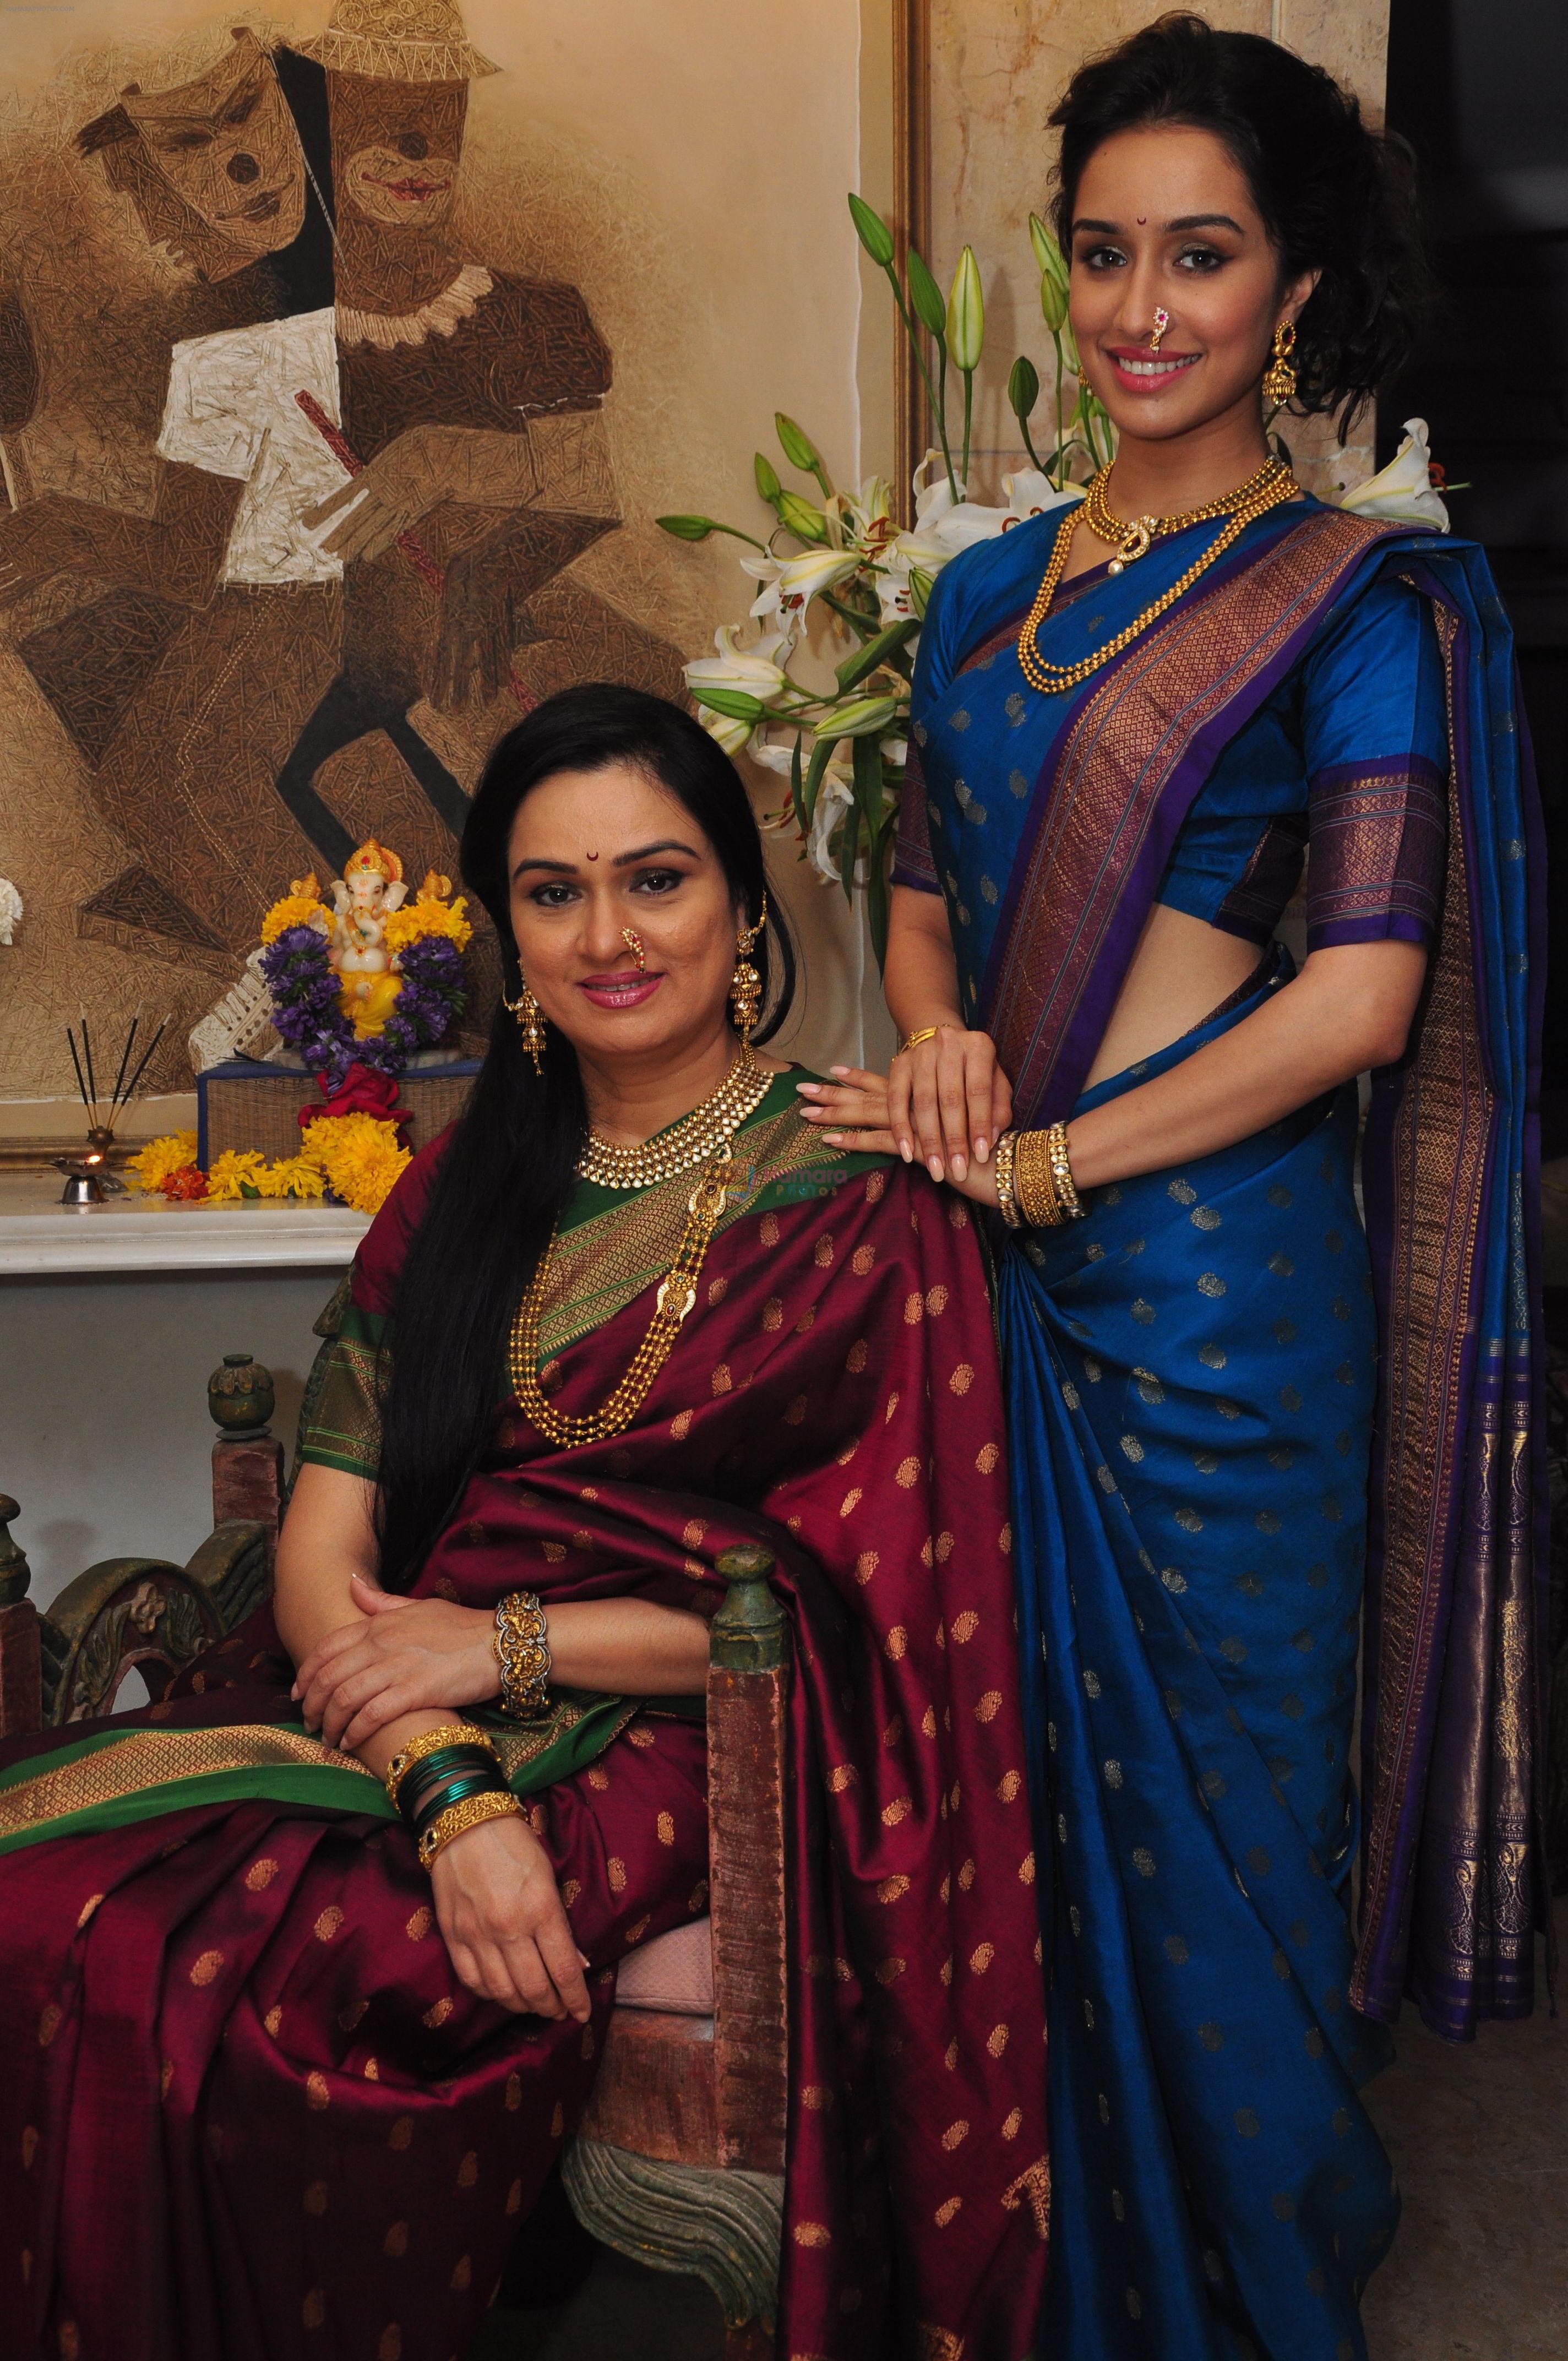 Shraddha Kapoor and Padmini Kolhapure dressed as Marathi Mulgi